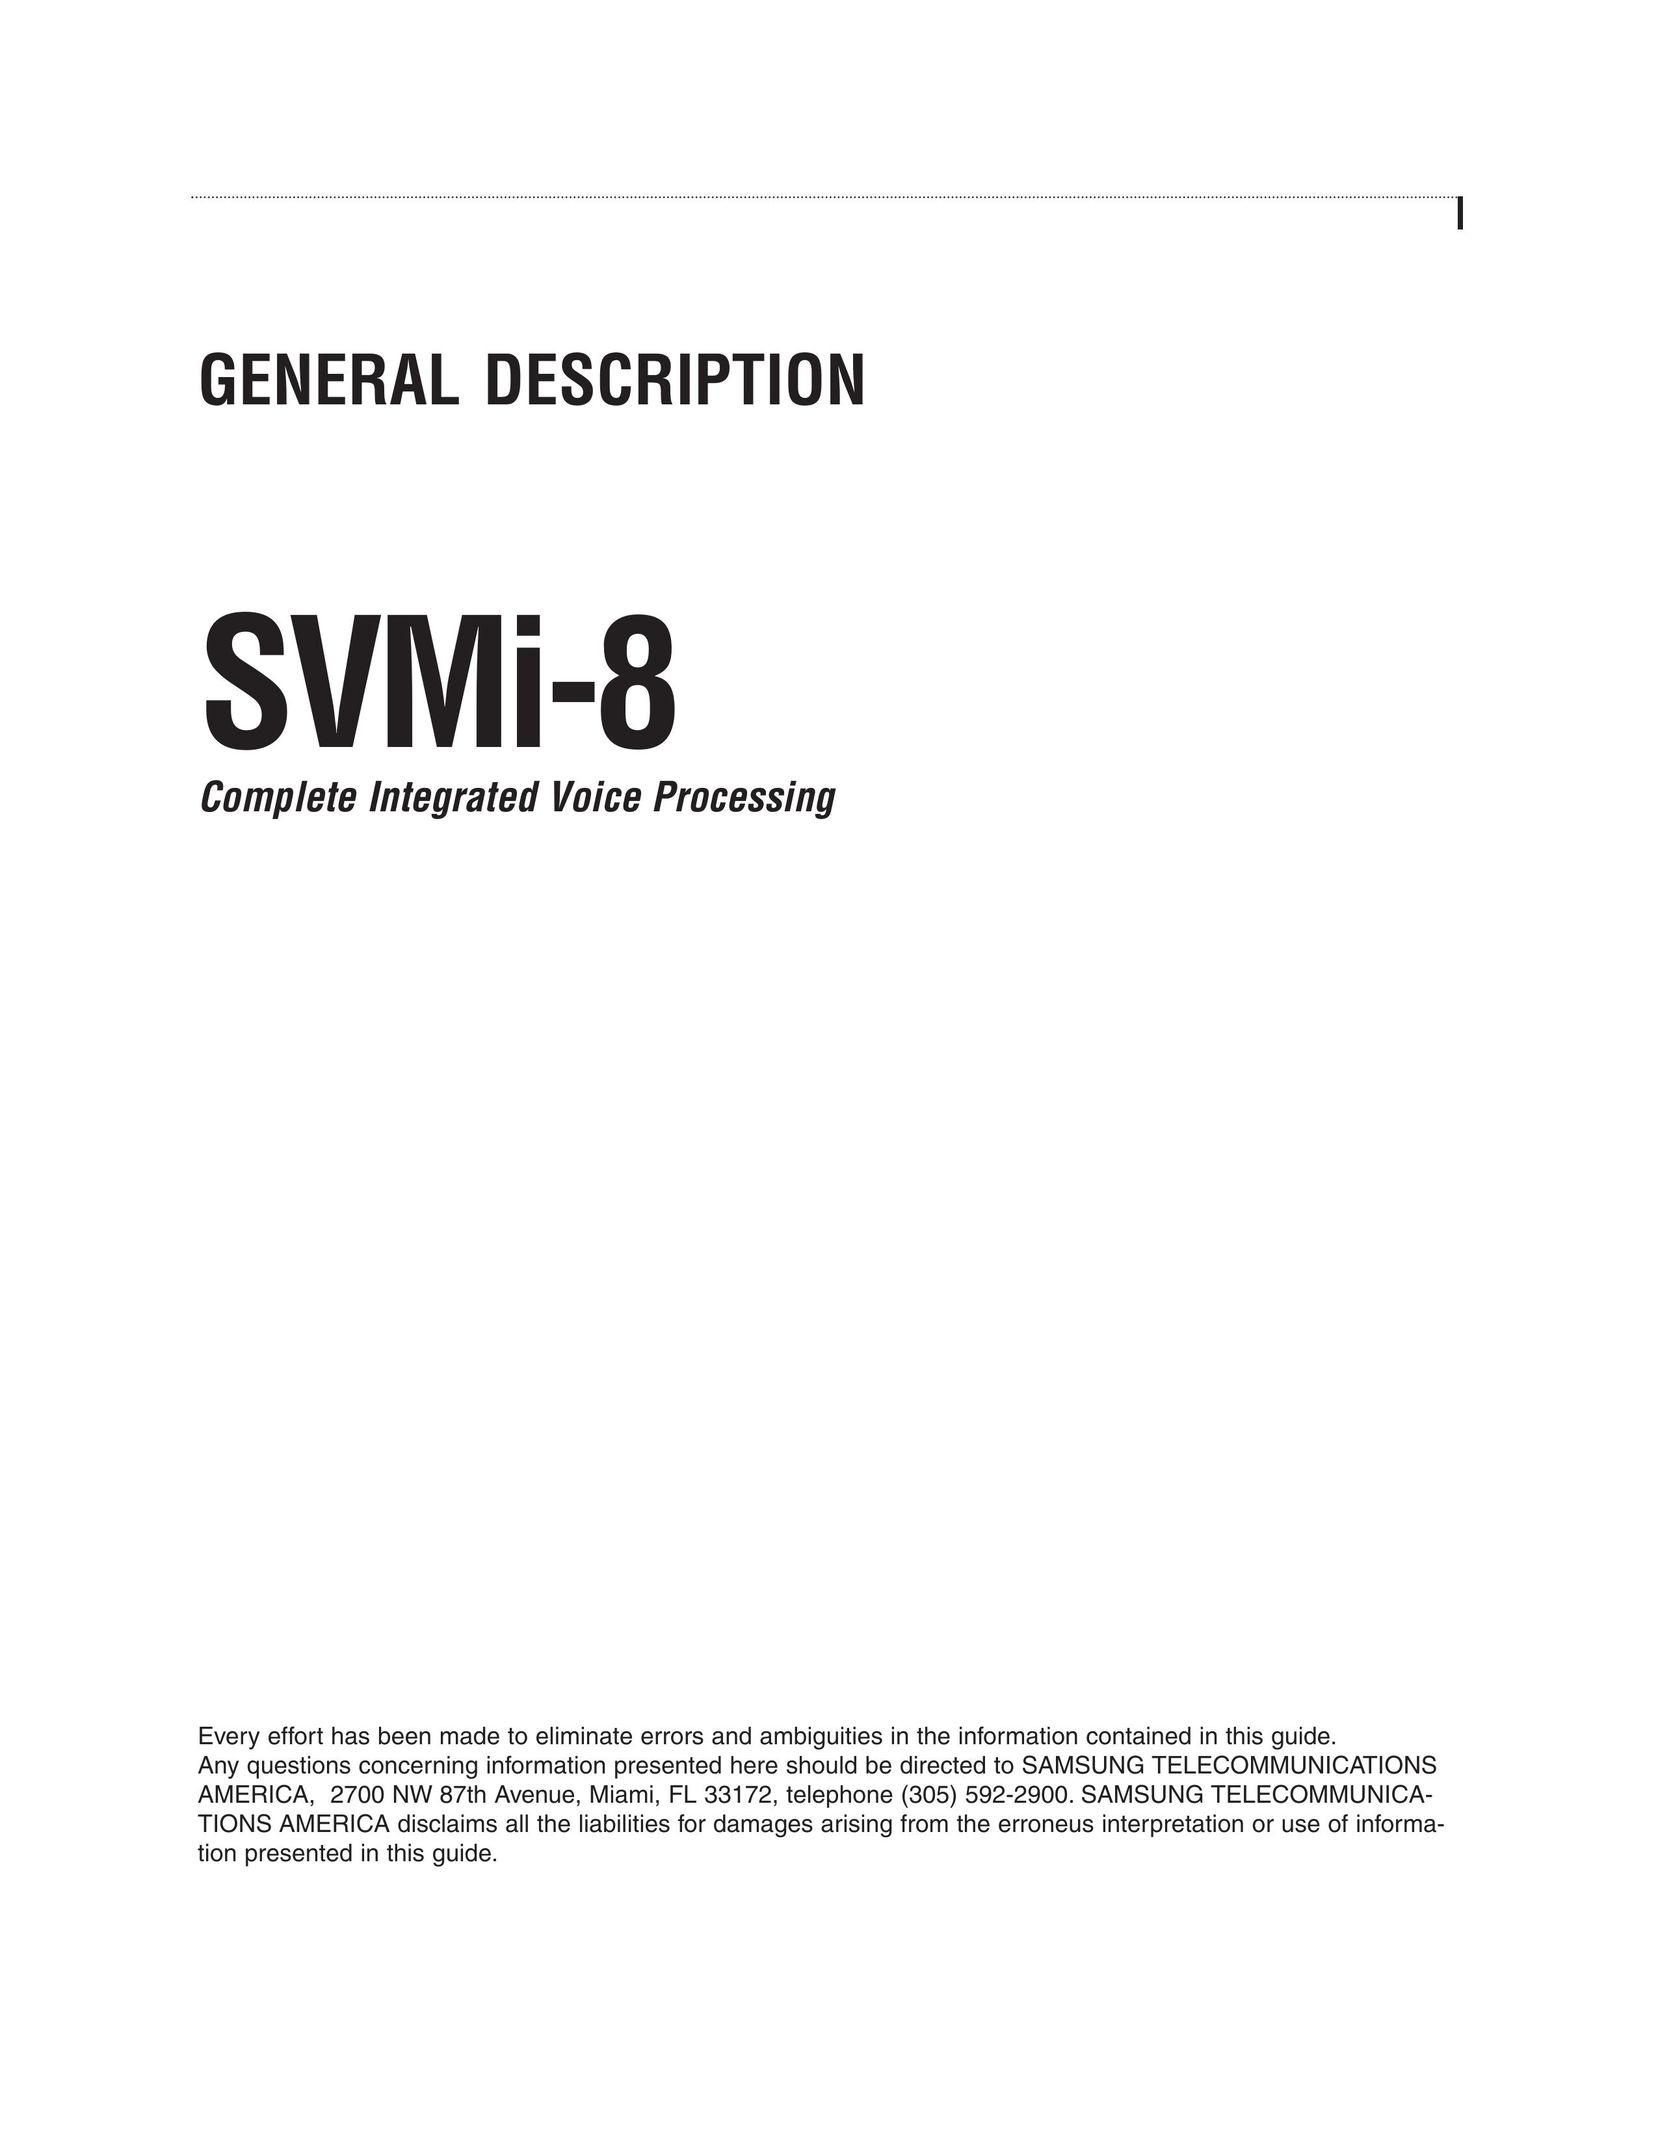 Samsung SVMi-8 Answering Machine User Manual